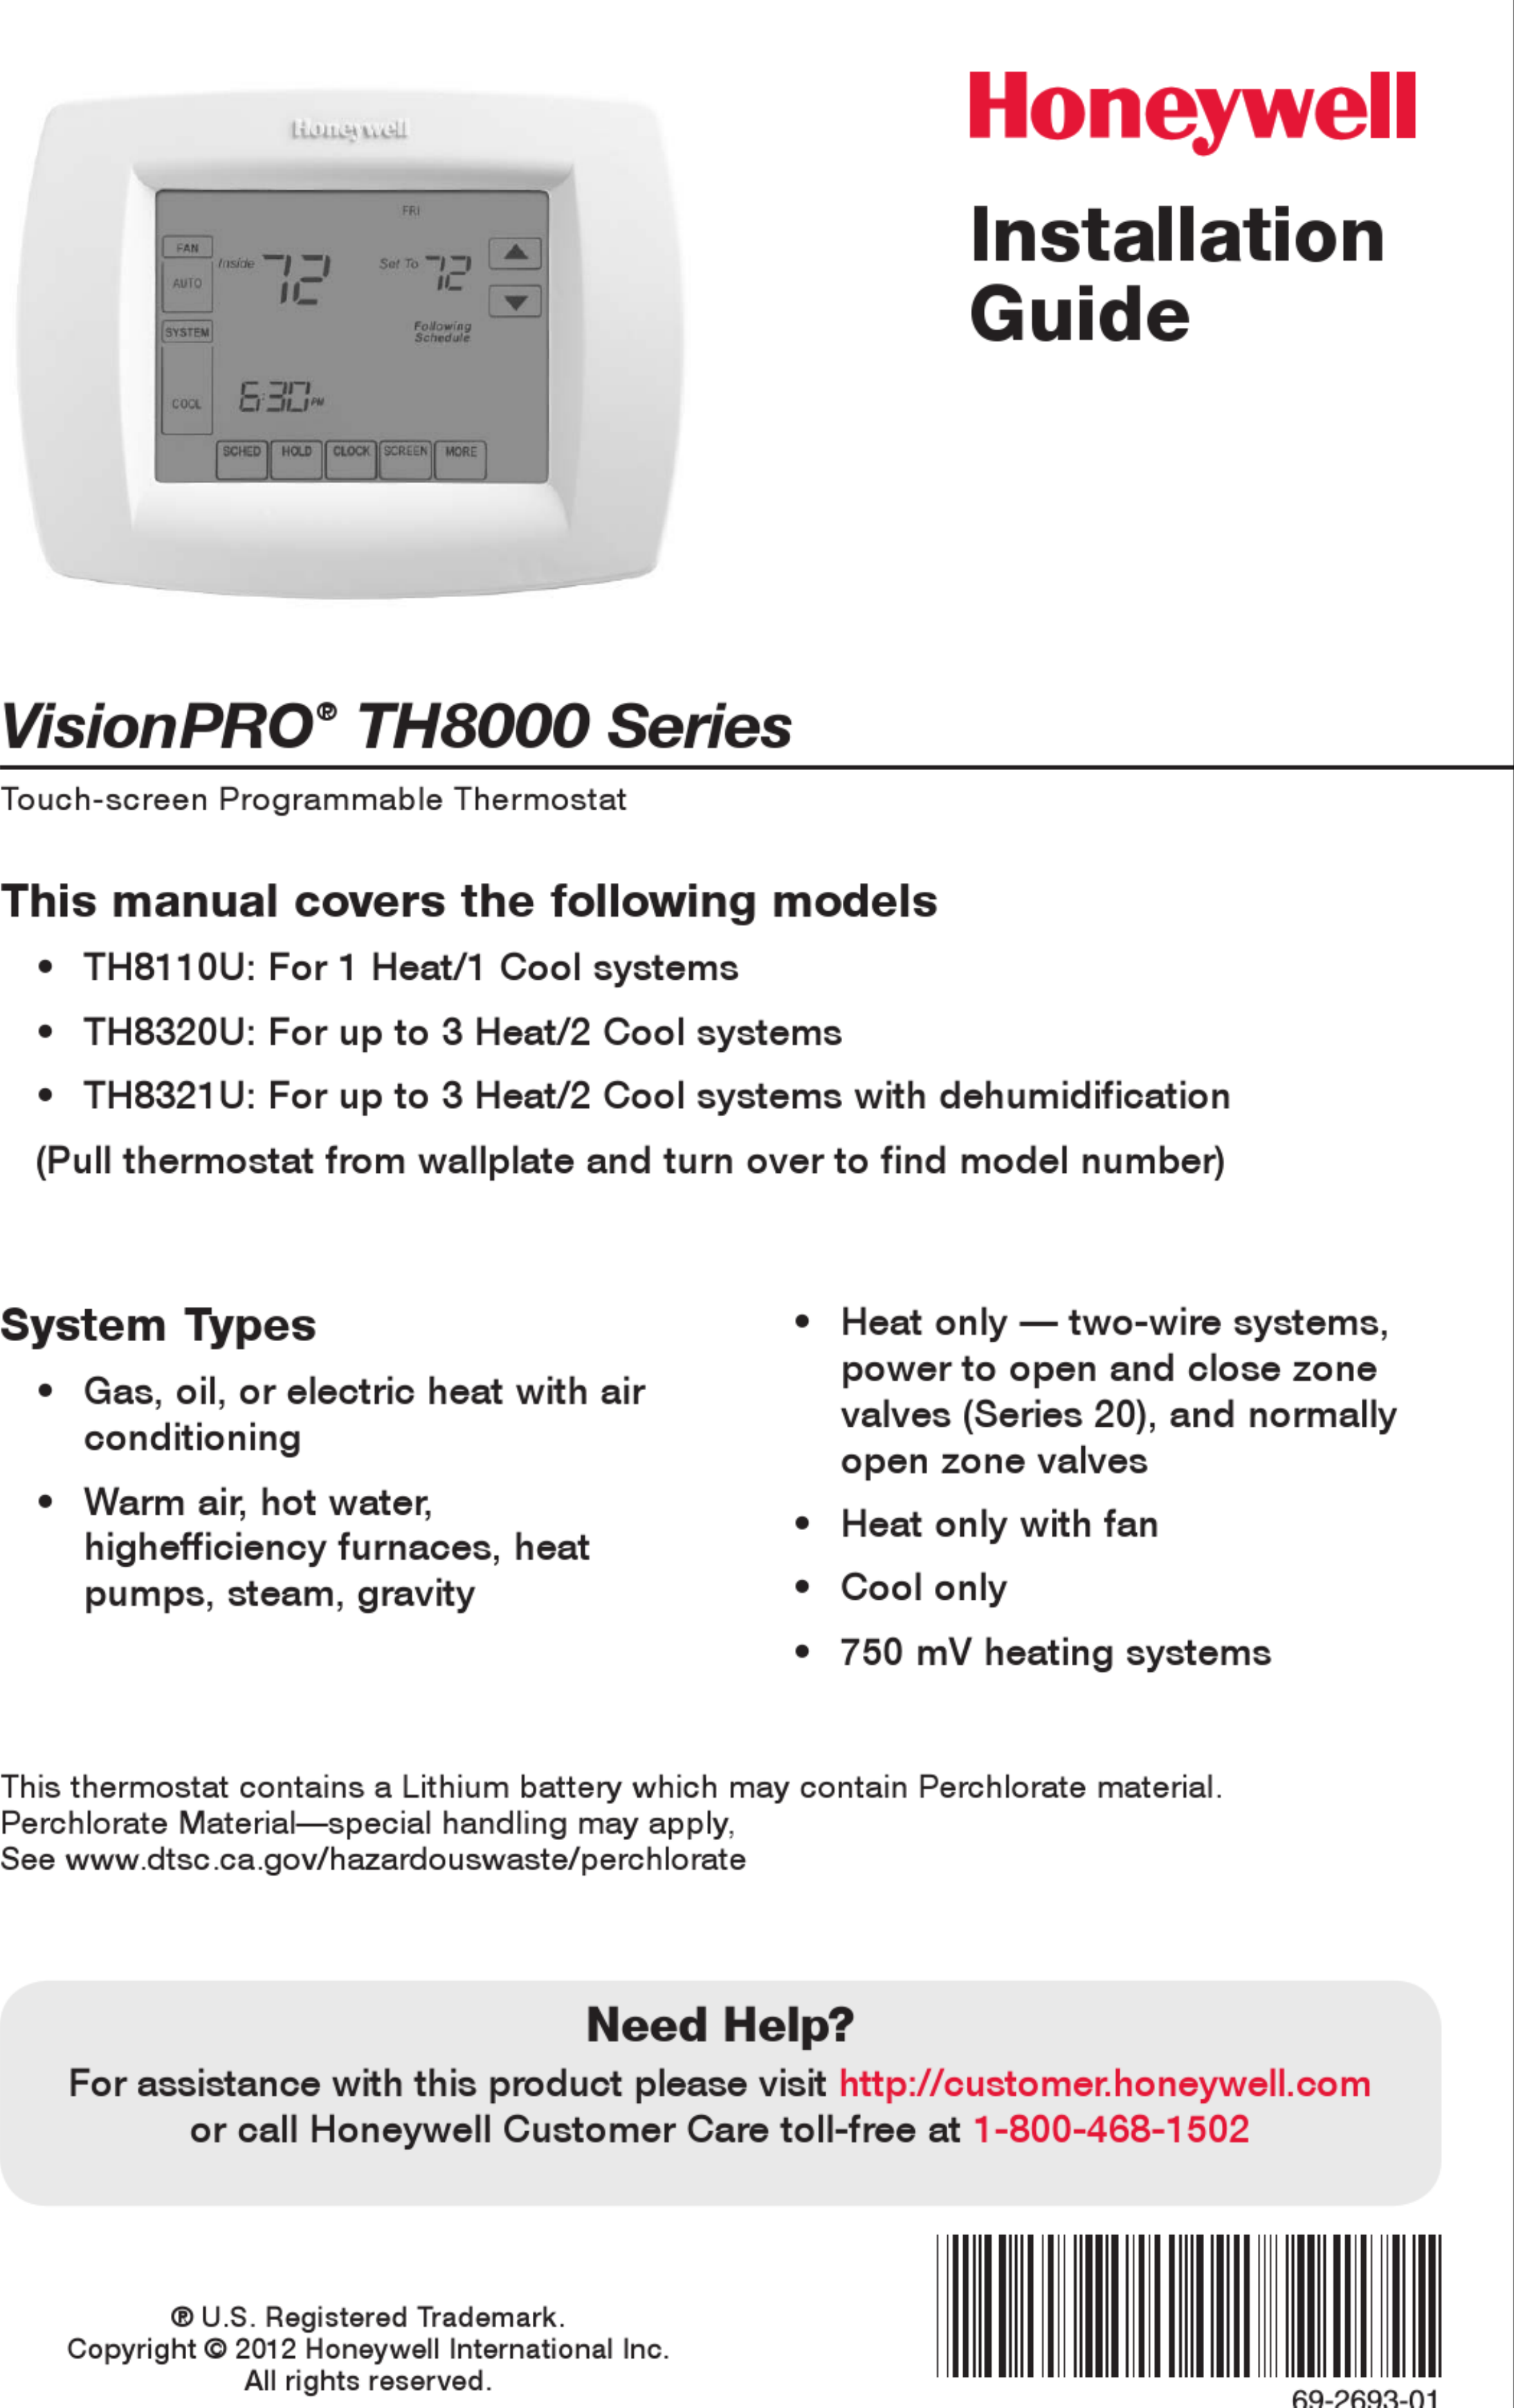 Honeywell Visionpro Th8000 Series Installation Manual 1003127 User